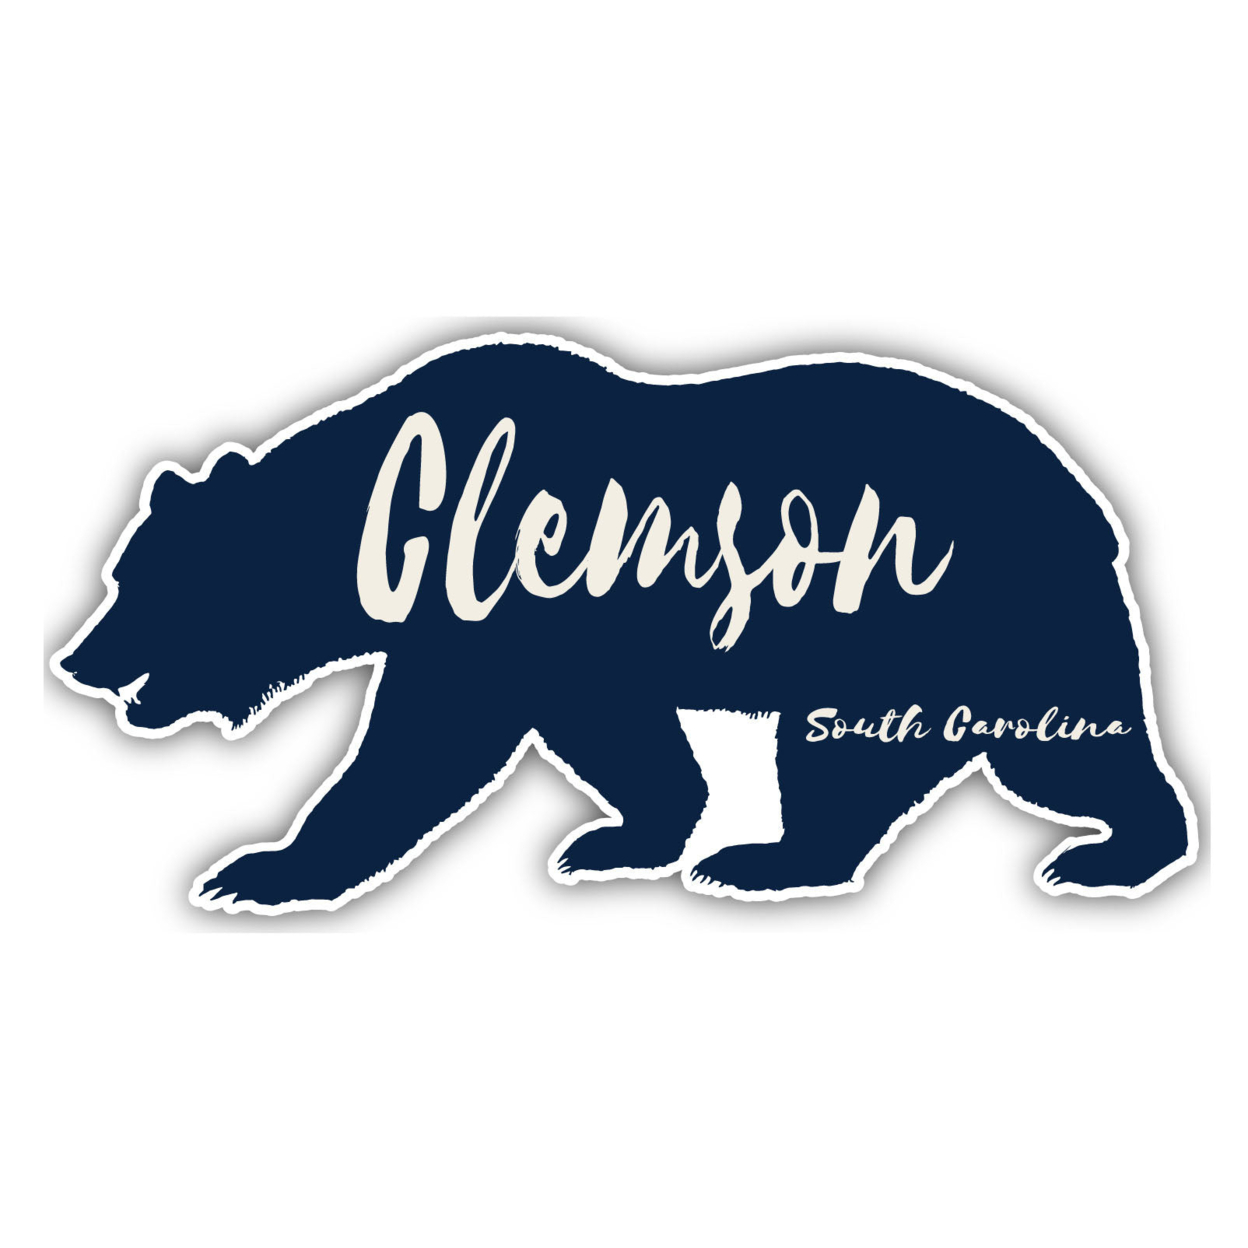 Clemson South Carolina Souvenir Decorative Stickers (Choose Theme And Size) - Single Unit, 4-Inch, Bear